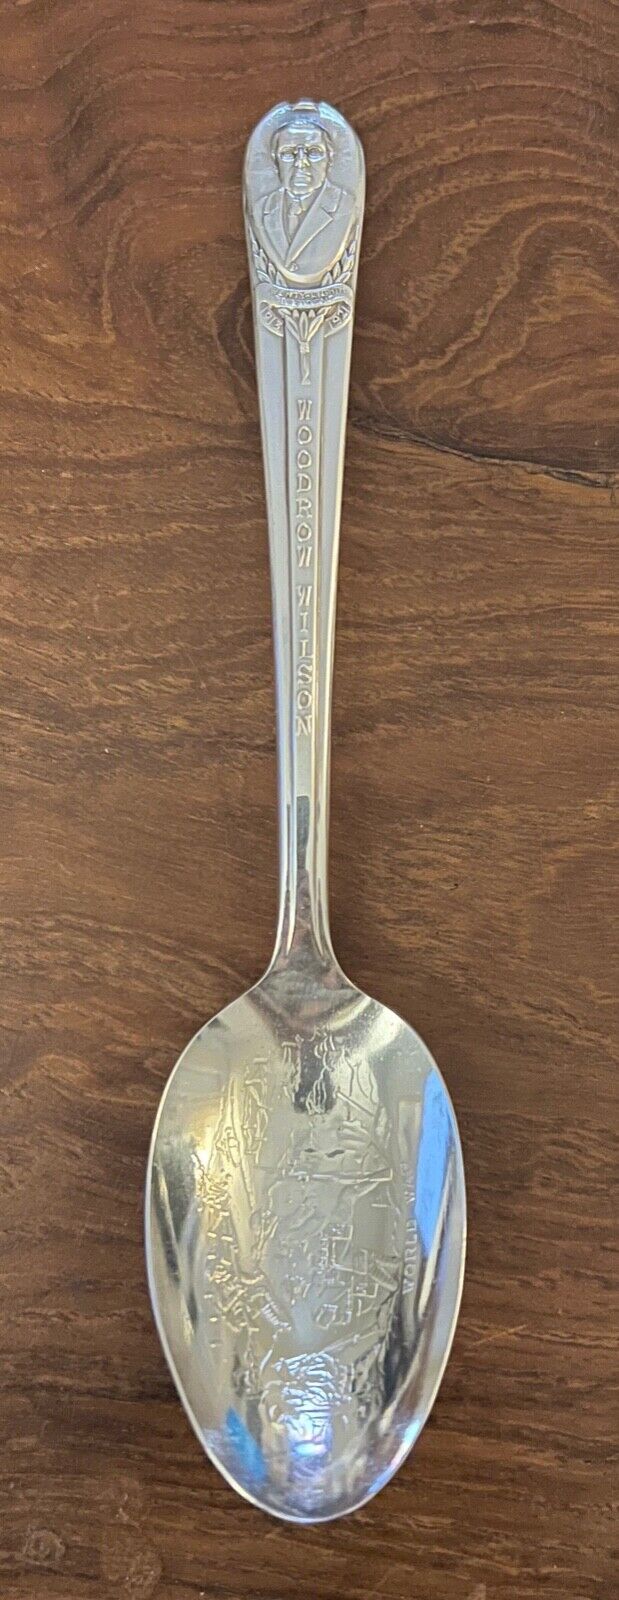 Woodrow Wilson Commemorative Spoon Vintage Rogers Silverplate US President